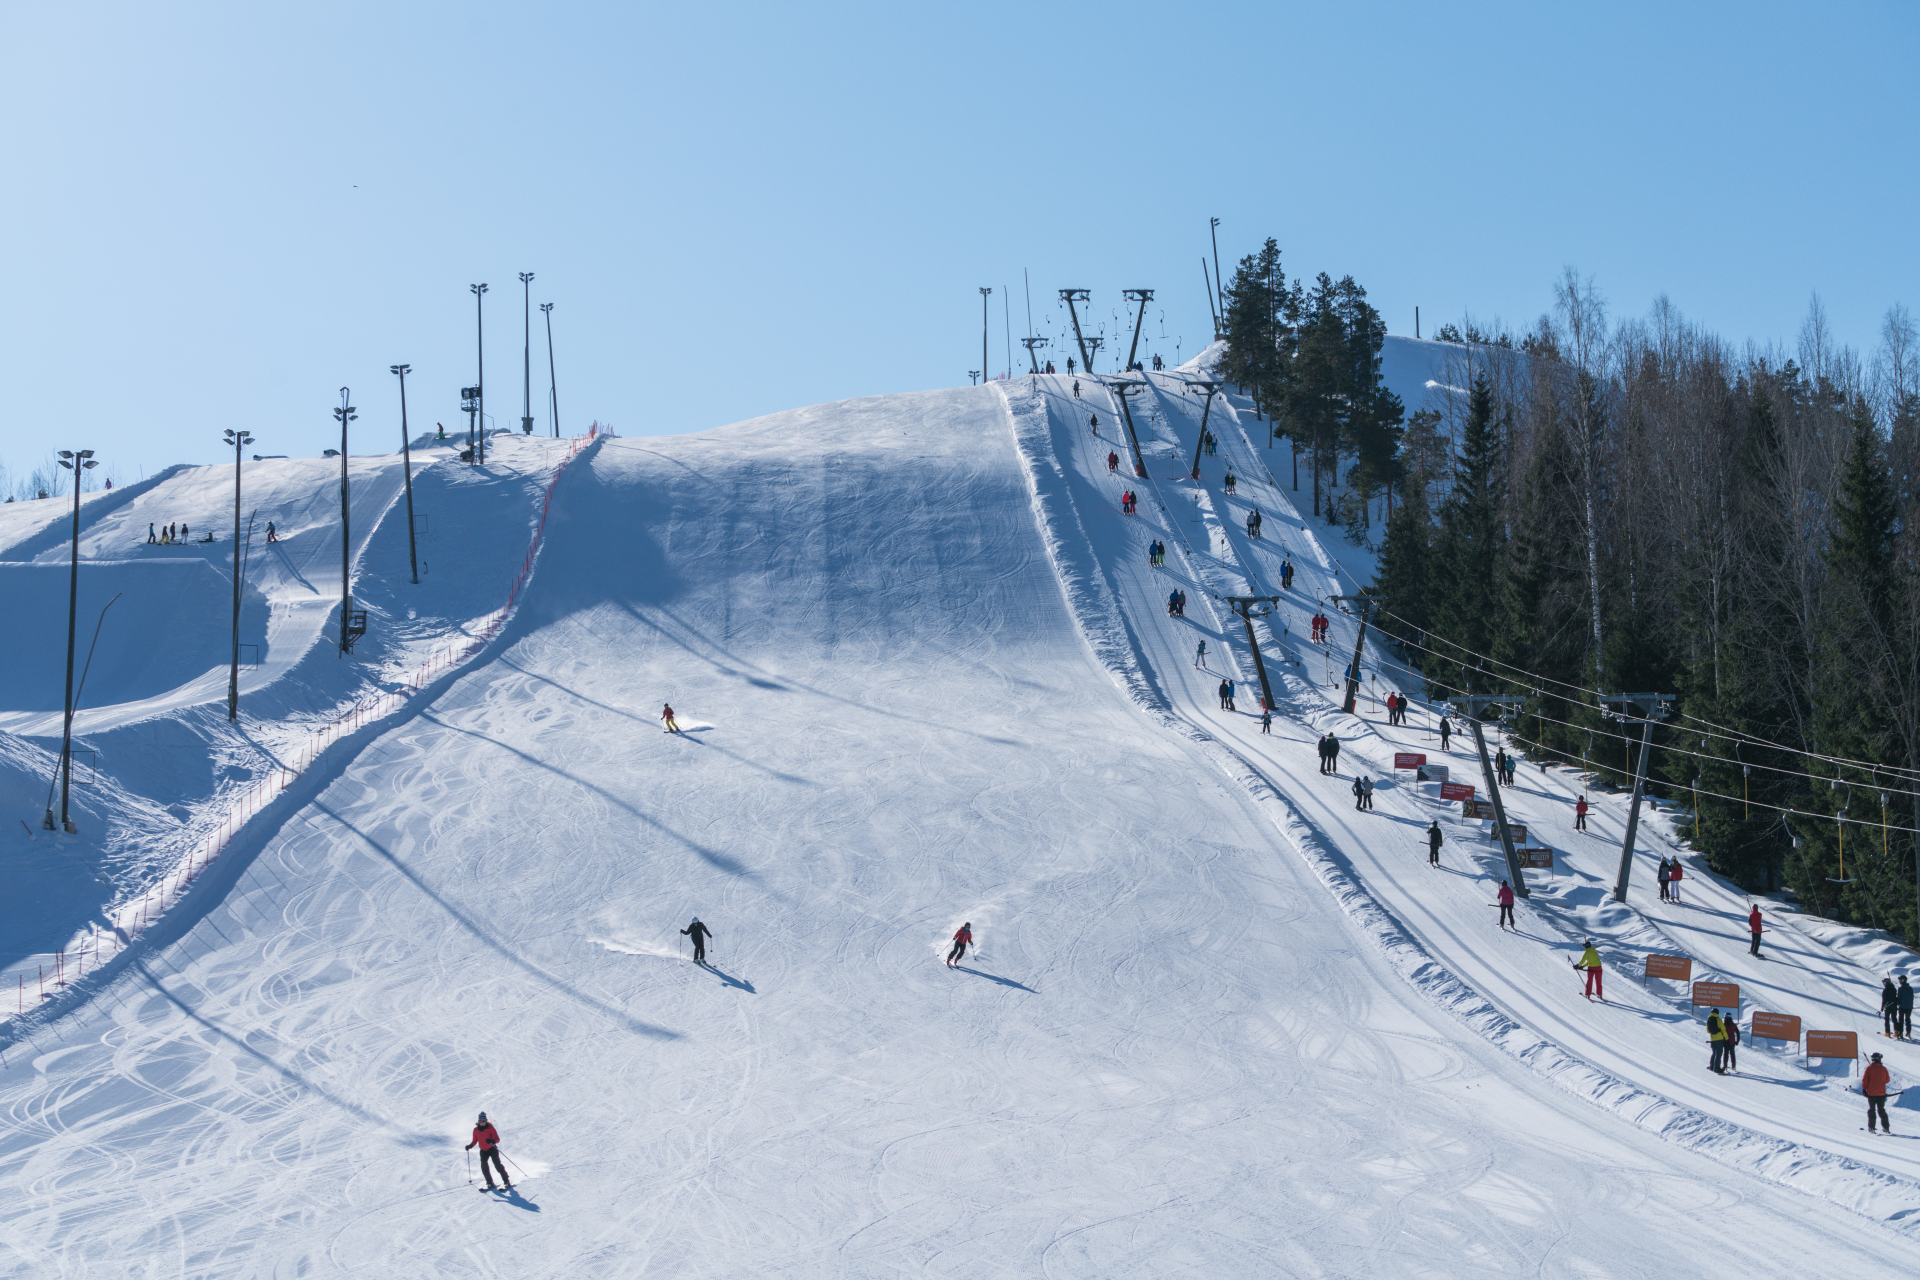  Británie Finsko Evropa rekreace zábava lyžování klima 